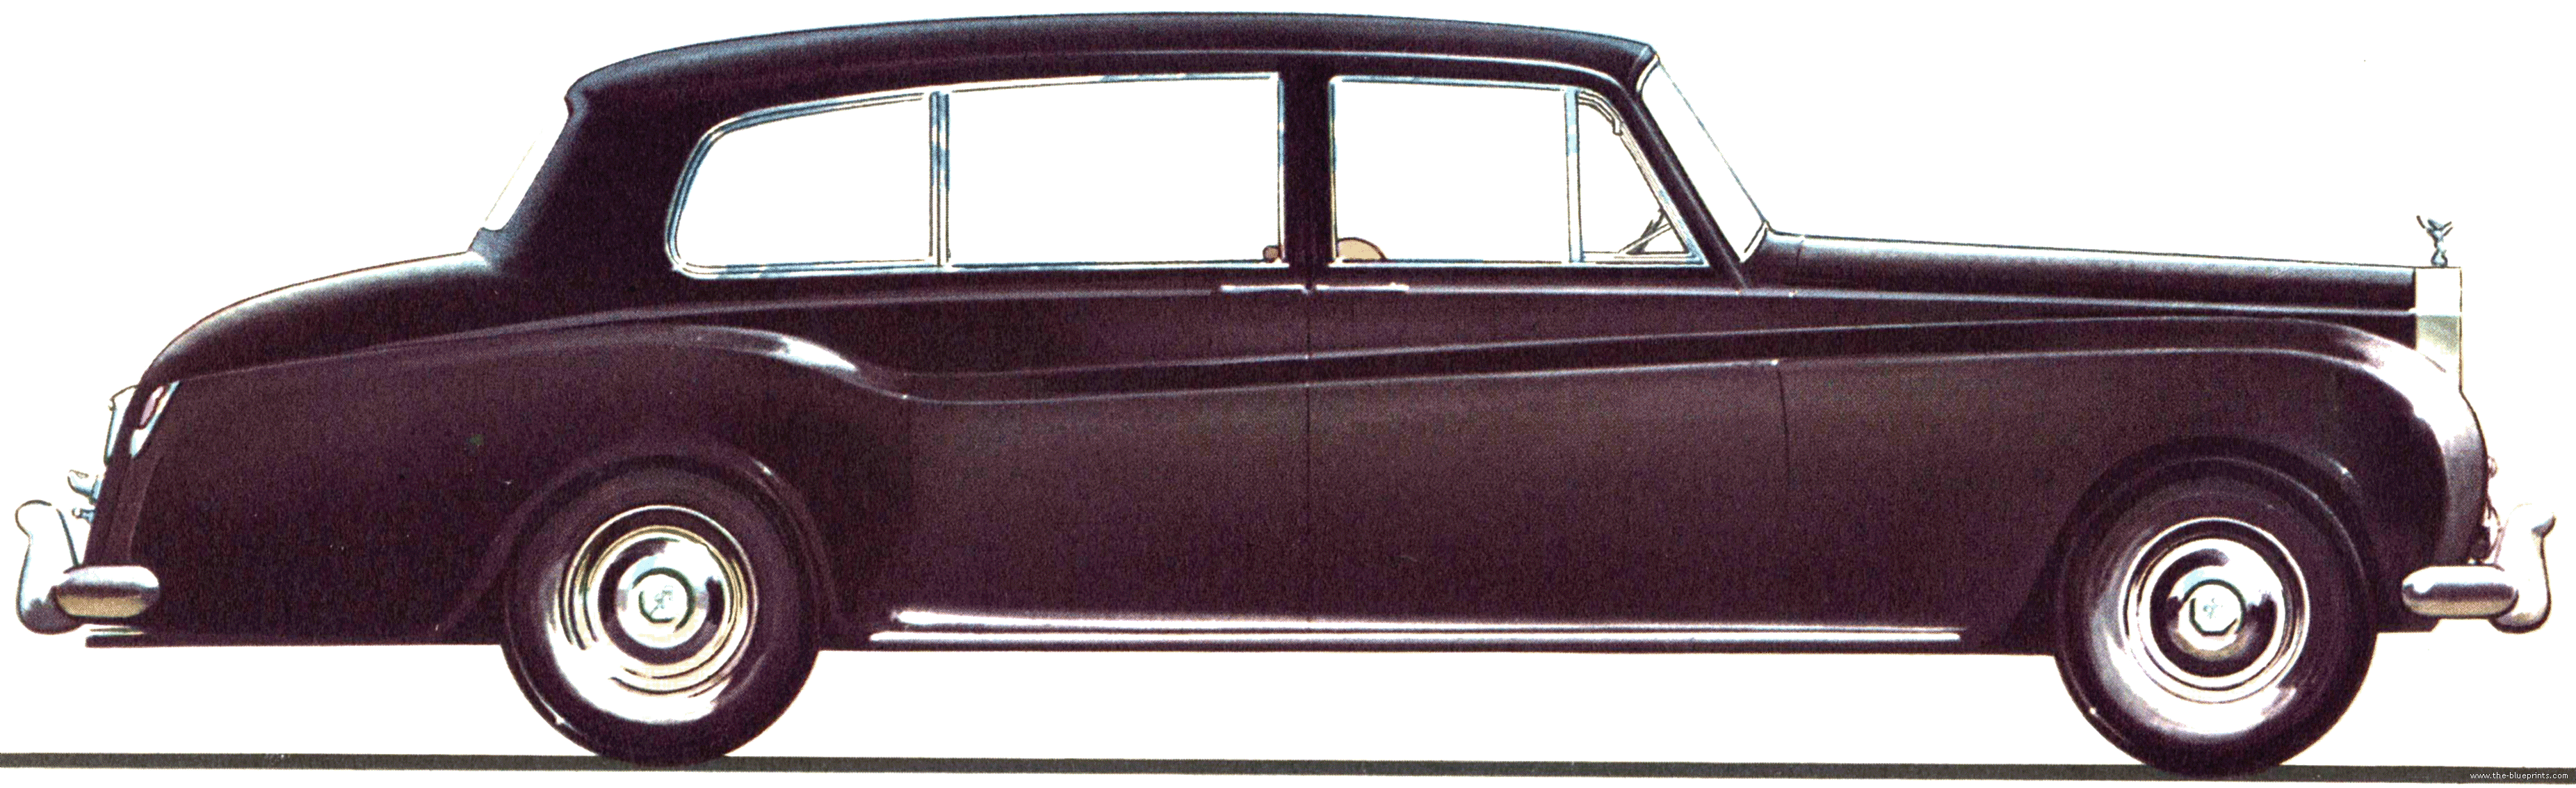 Rolls-Royce Phantom V 1960 #11